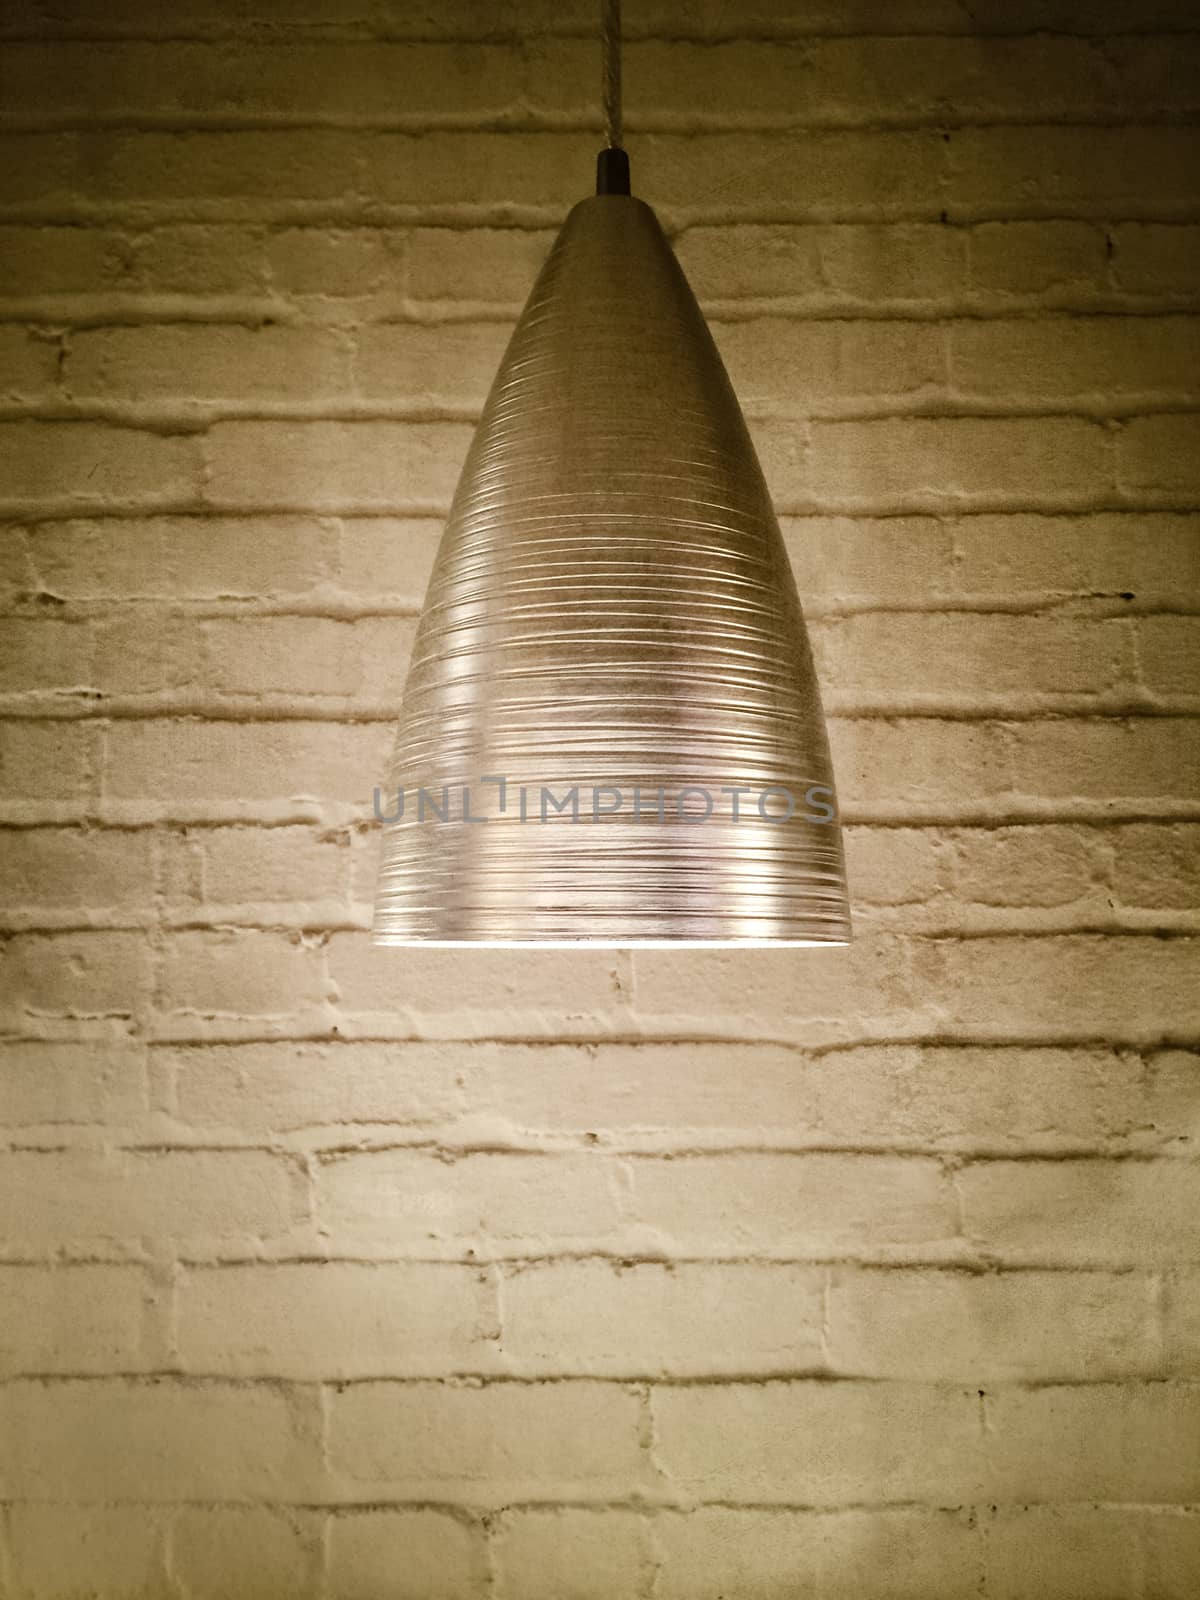 Modern metal lamp on brick wall background.